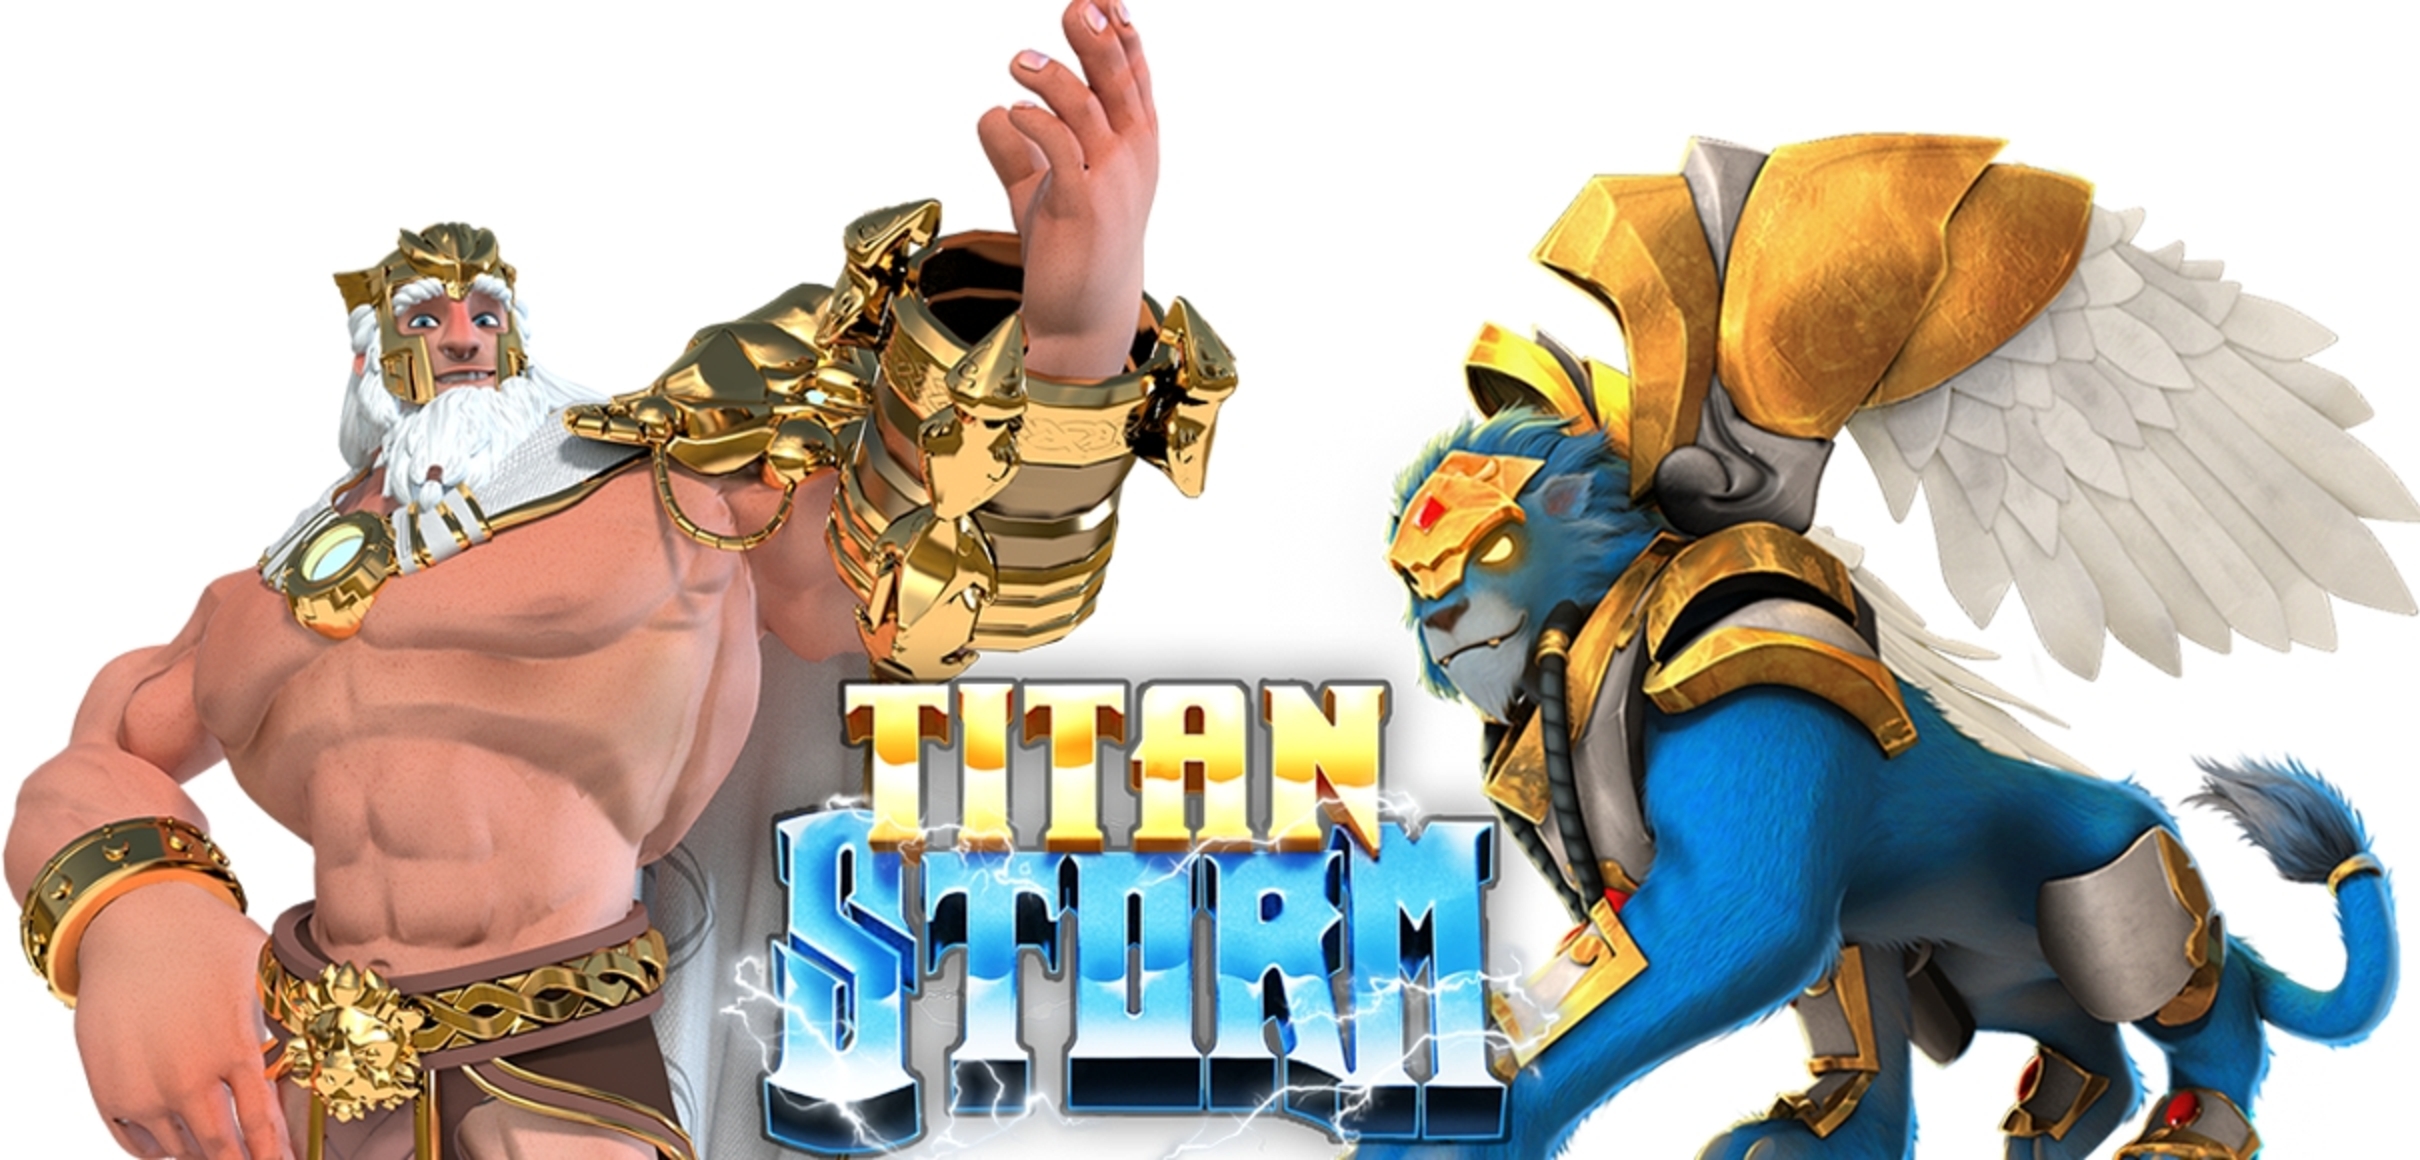 The Titan Storm Online Slot Demo Game by NextGen Gaming